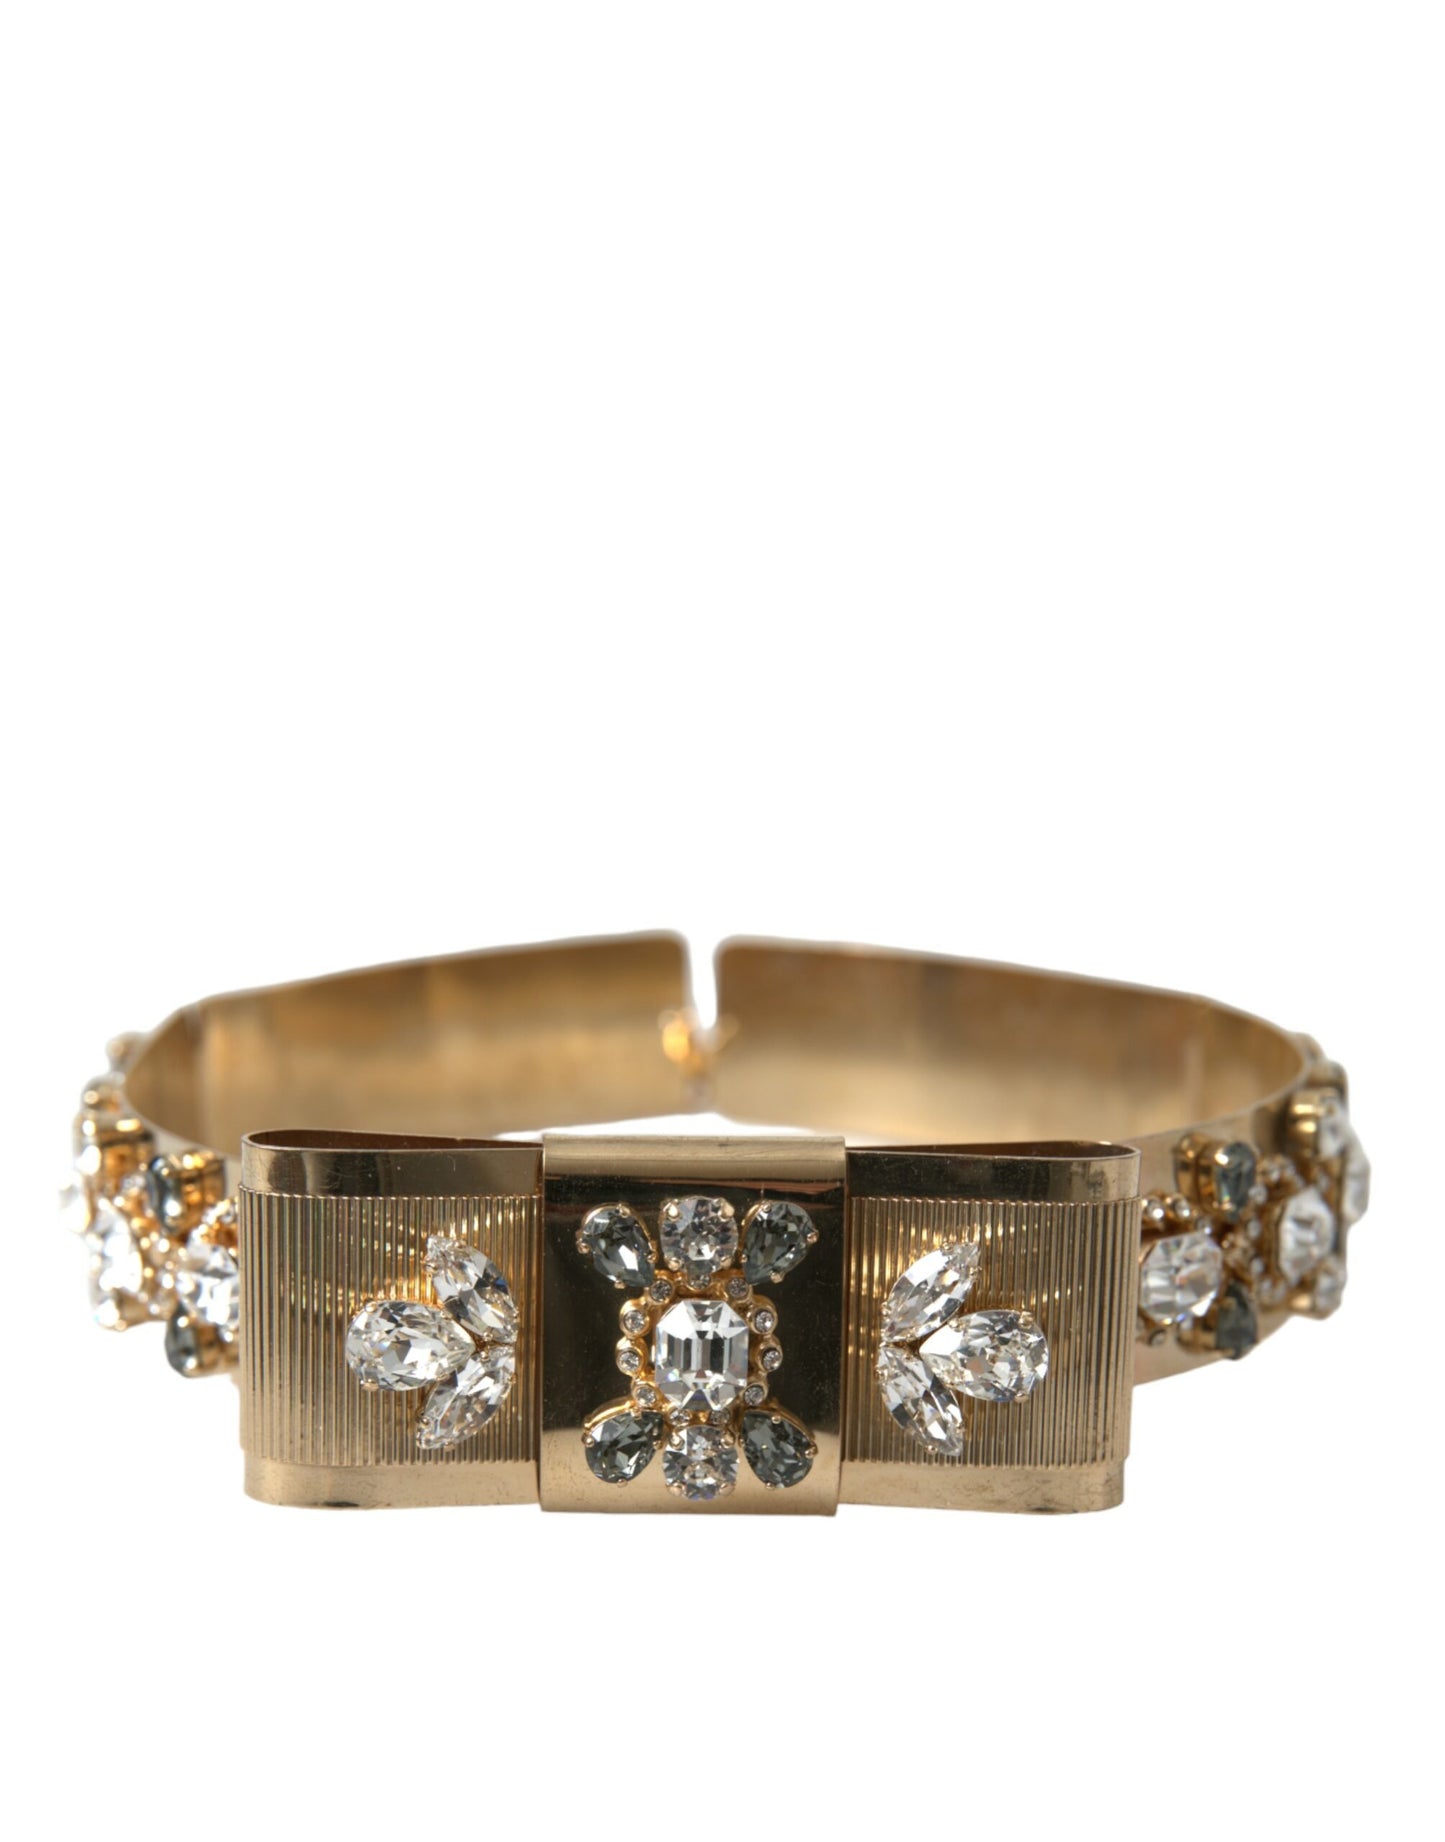 Dolce & Gabbana Women's Gold Tone Brass Crystal Embellished Belt